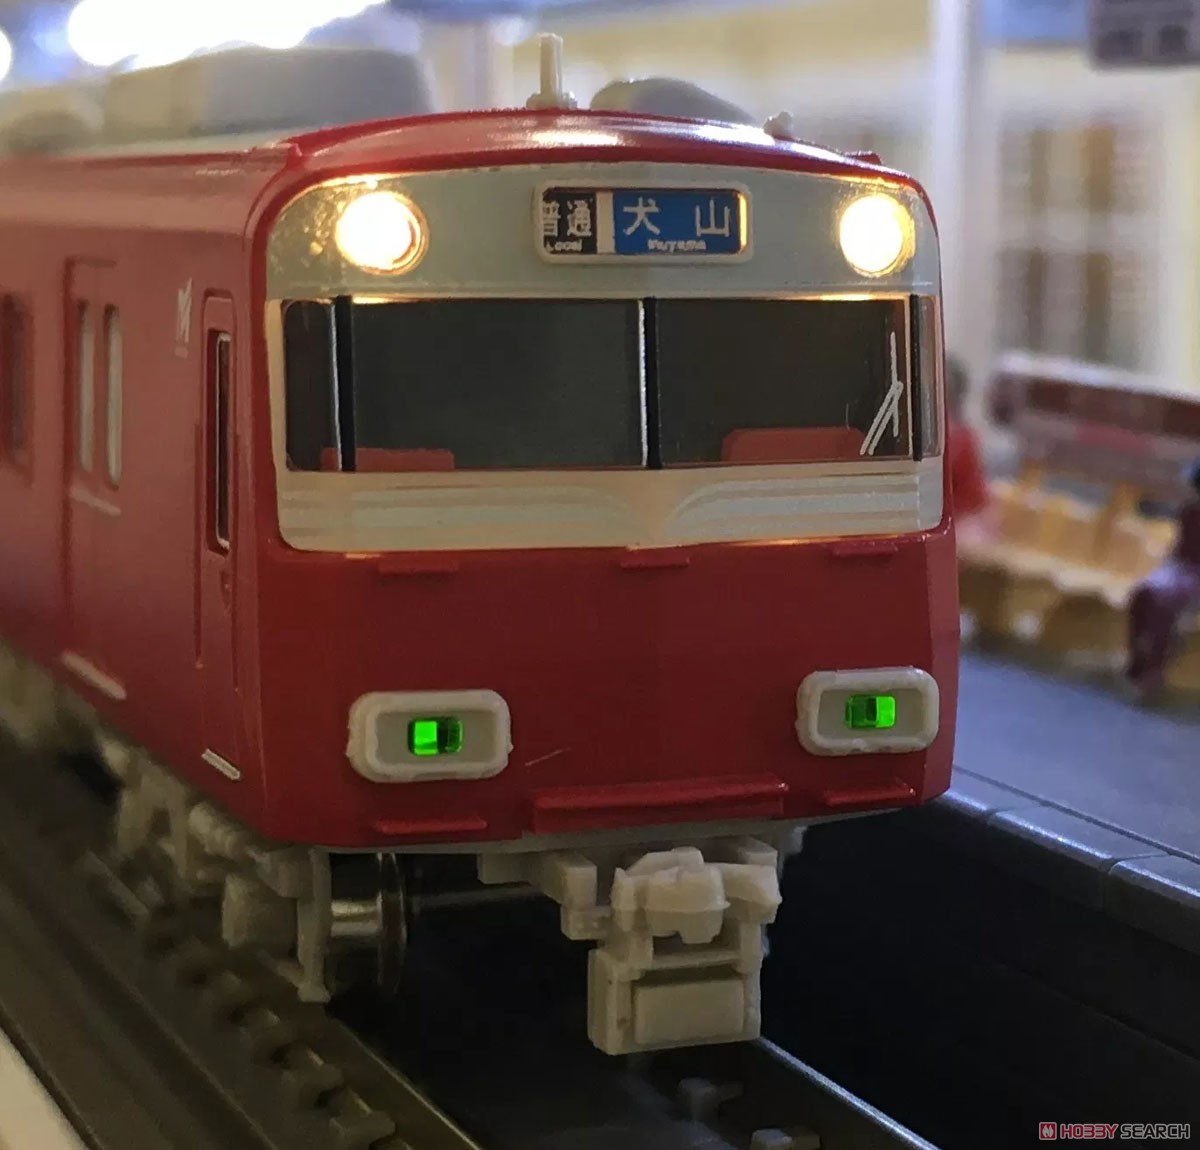 【 G01 】 標識灯付 LEDライト基板 Type G1 (1個入) (鉄道模型) その他の画像2